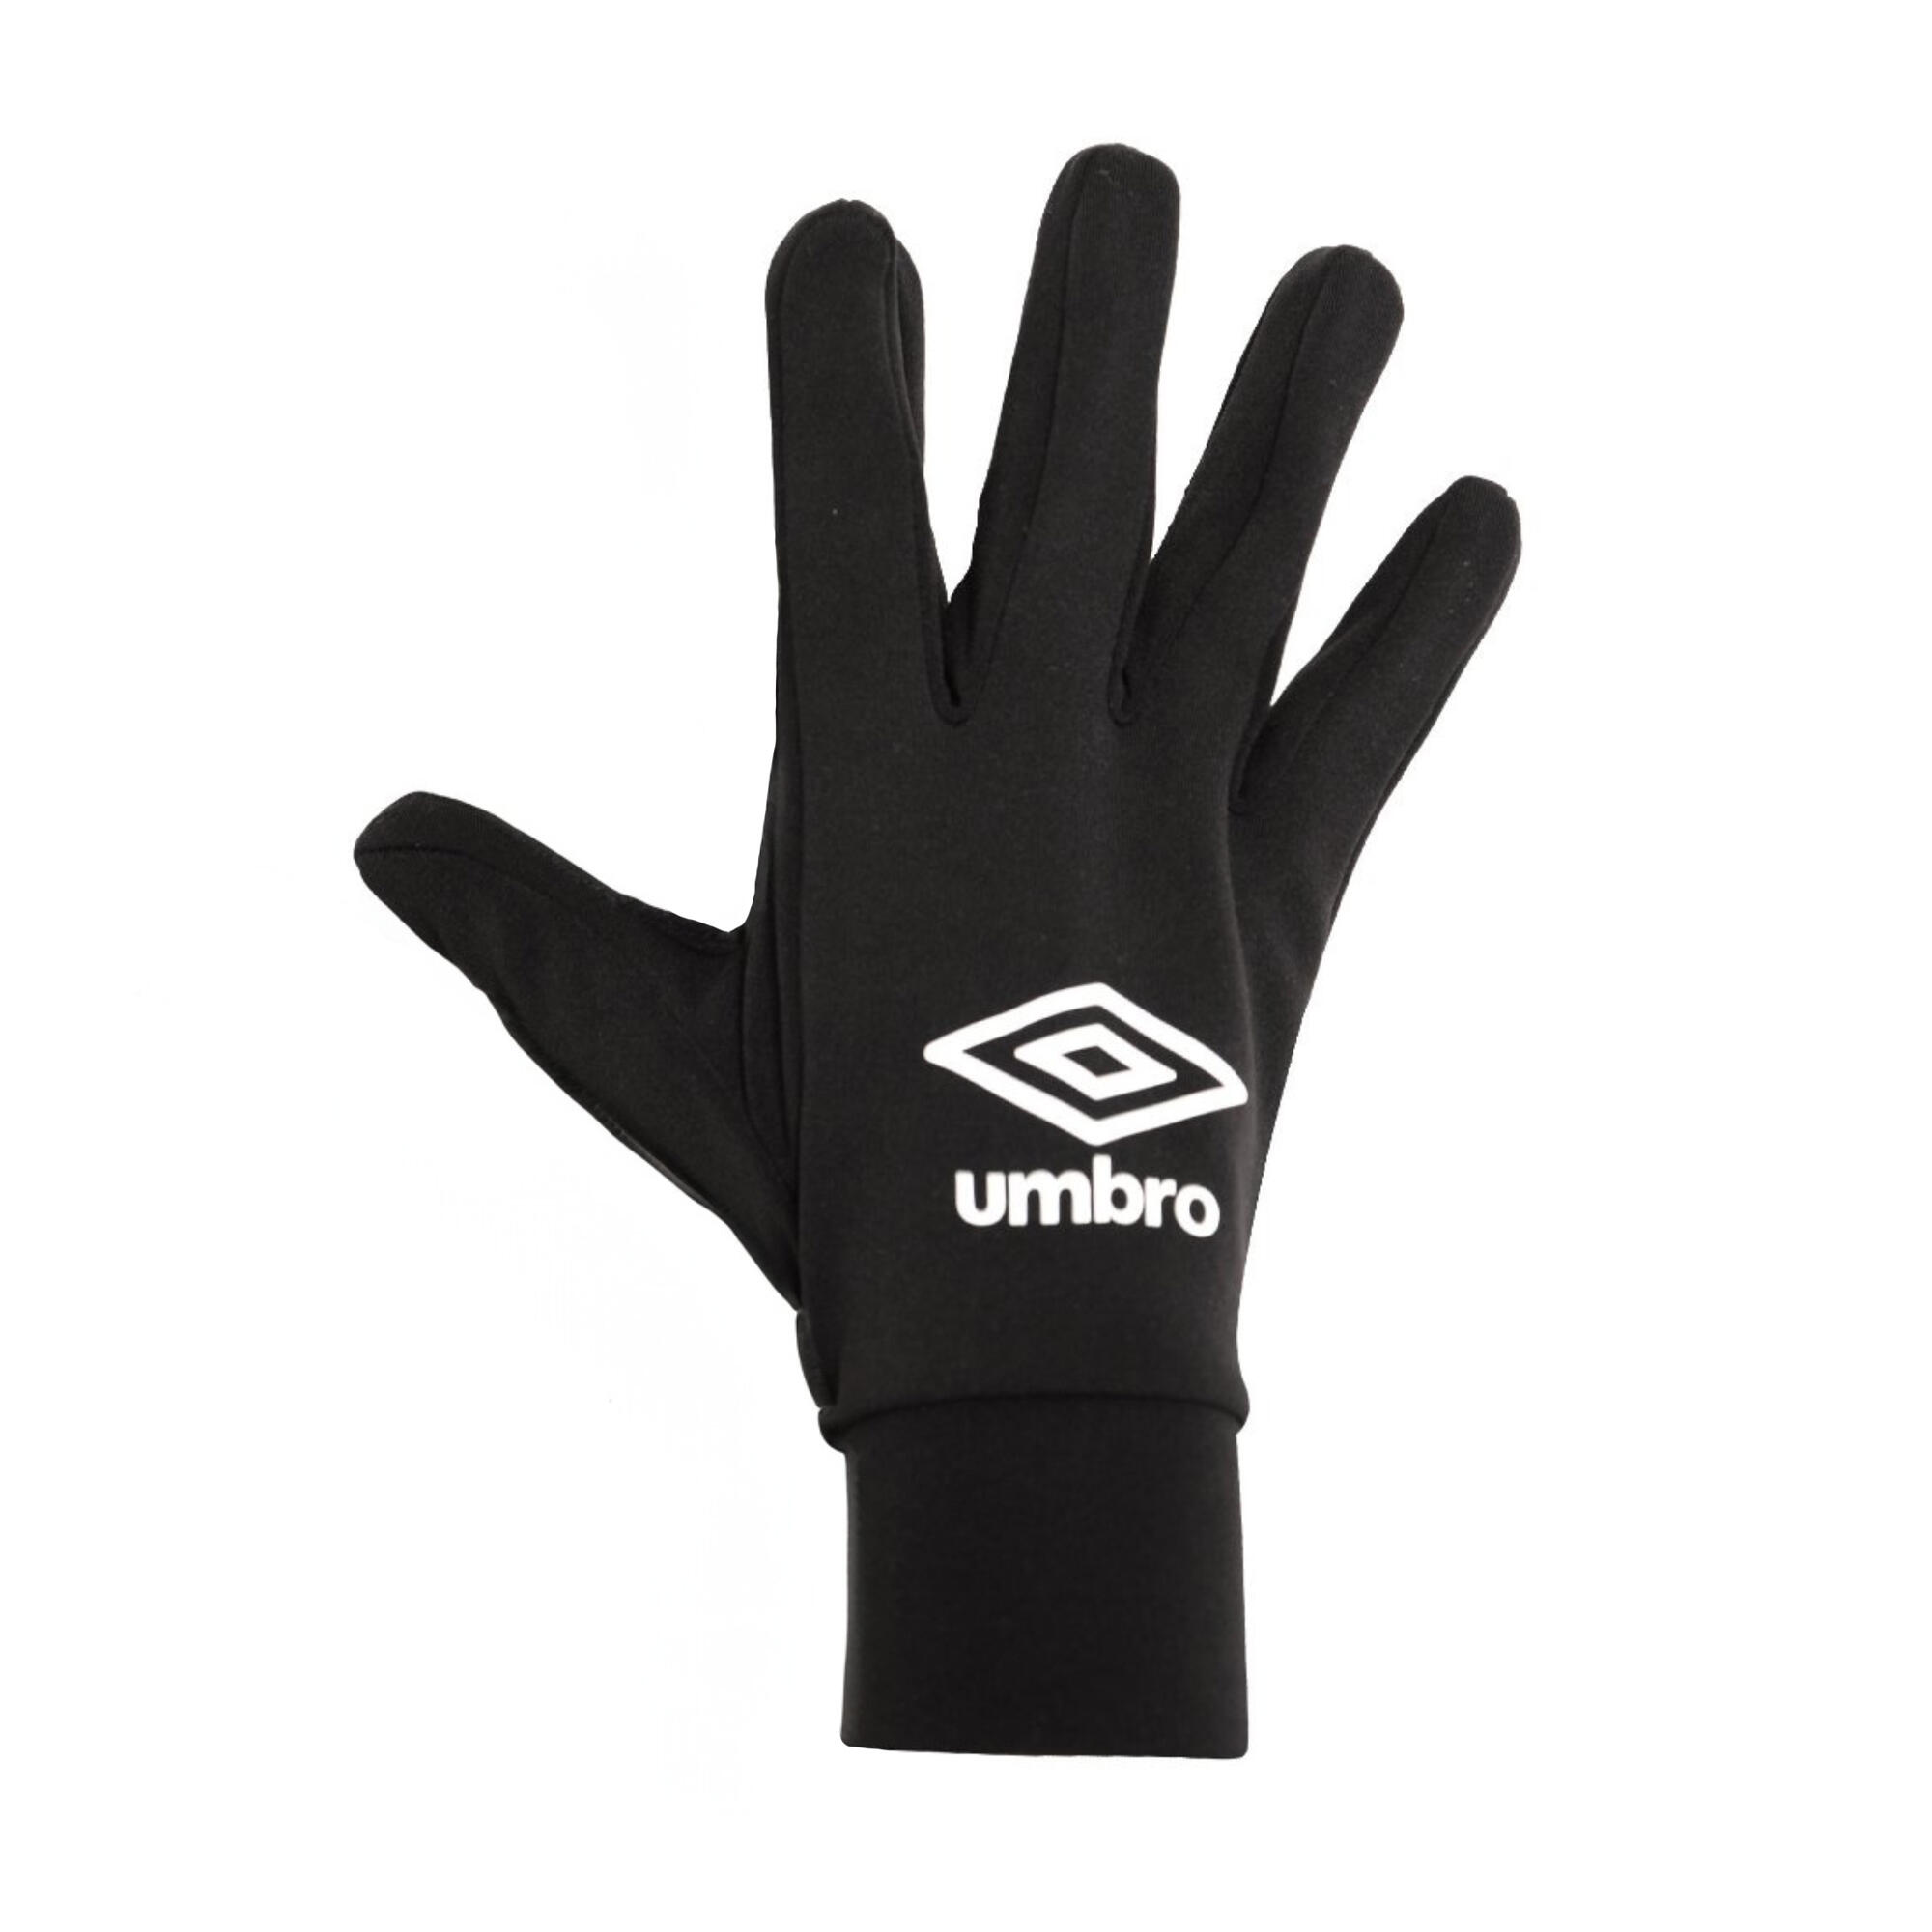 Unisex Adult Technical Winter Gloves (Black) 3/3